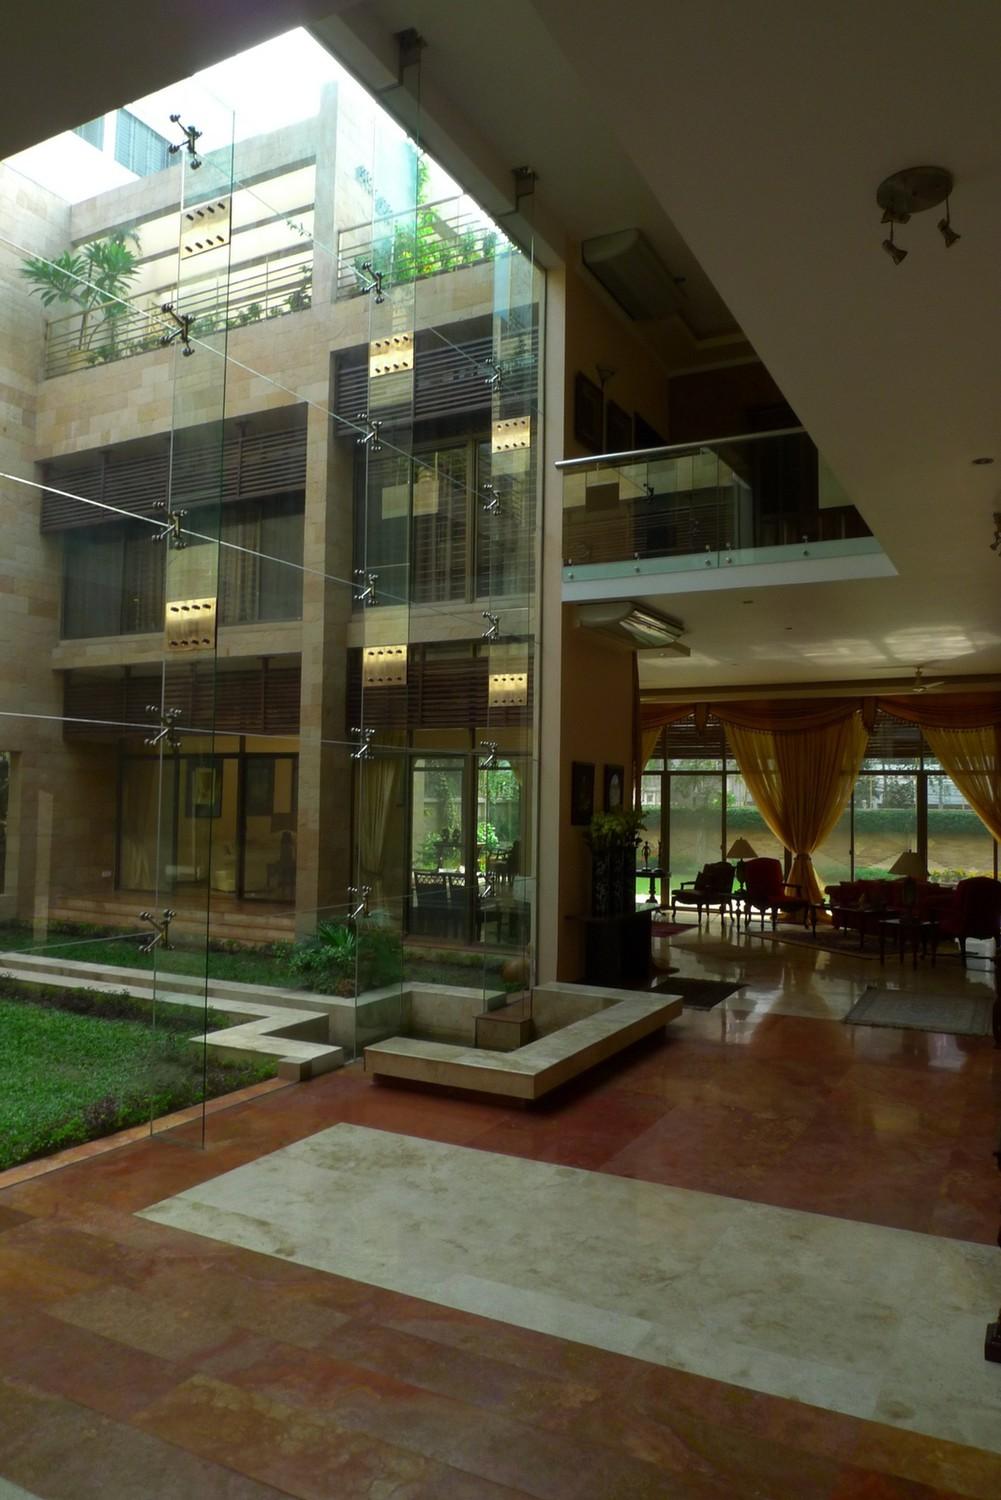 Shanchita Tiara House - Blurring the edge of the inside & outside